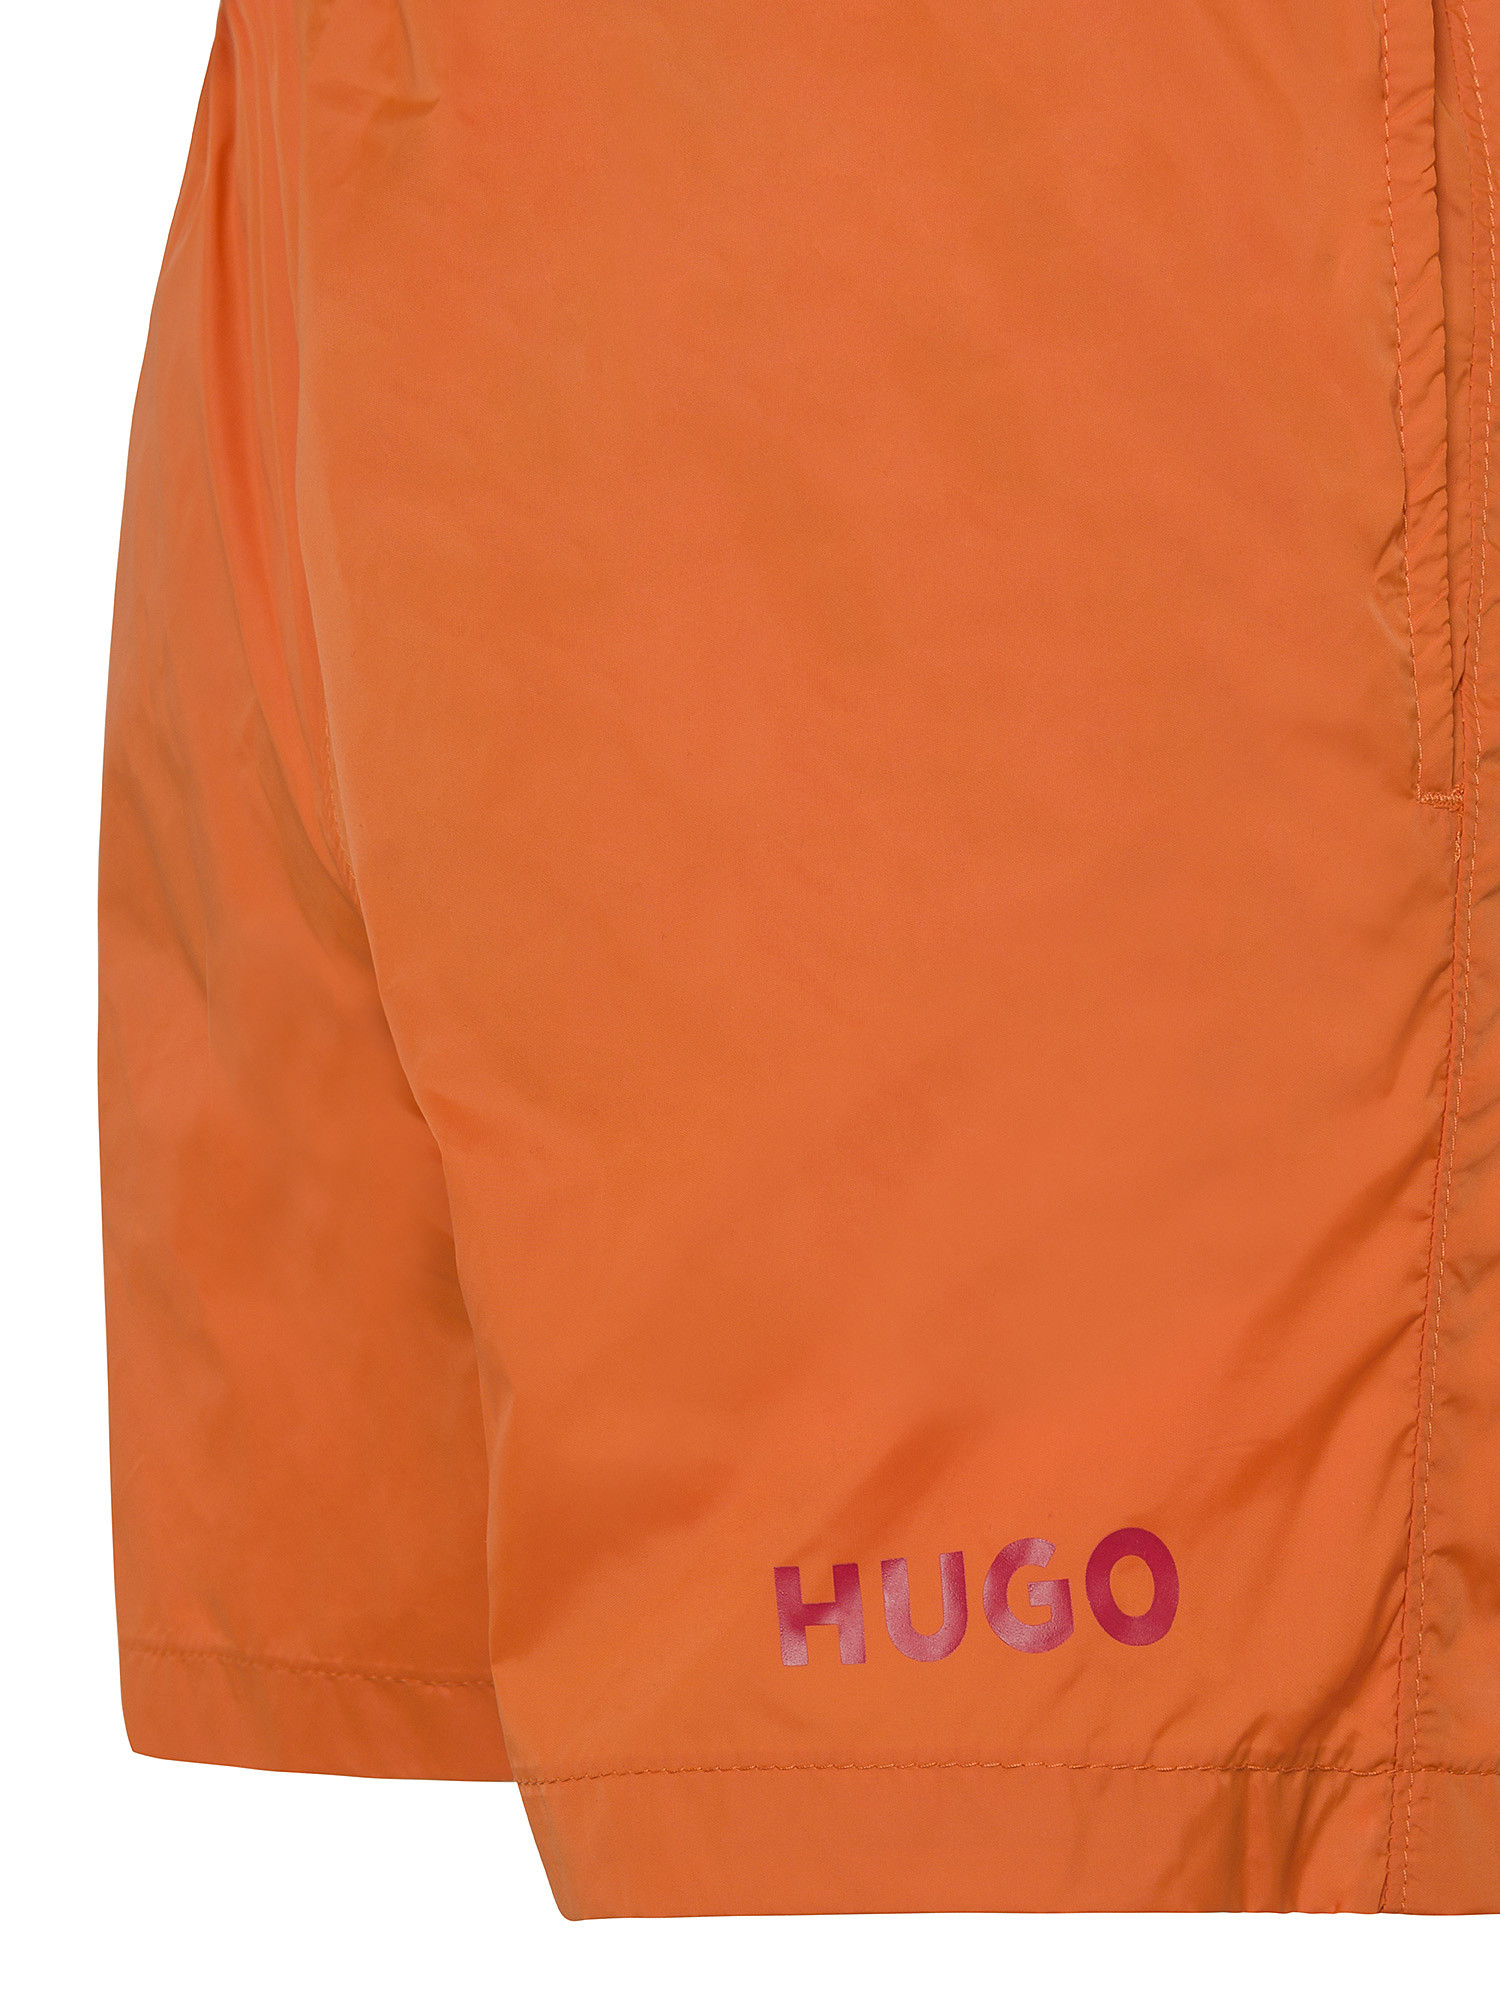 Hugo - Boxer mare con logo, Arancione, large image number 2